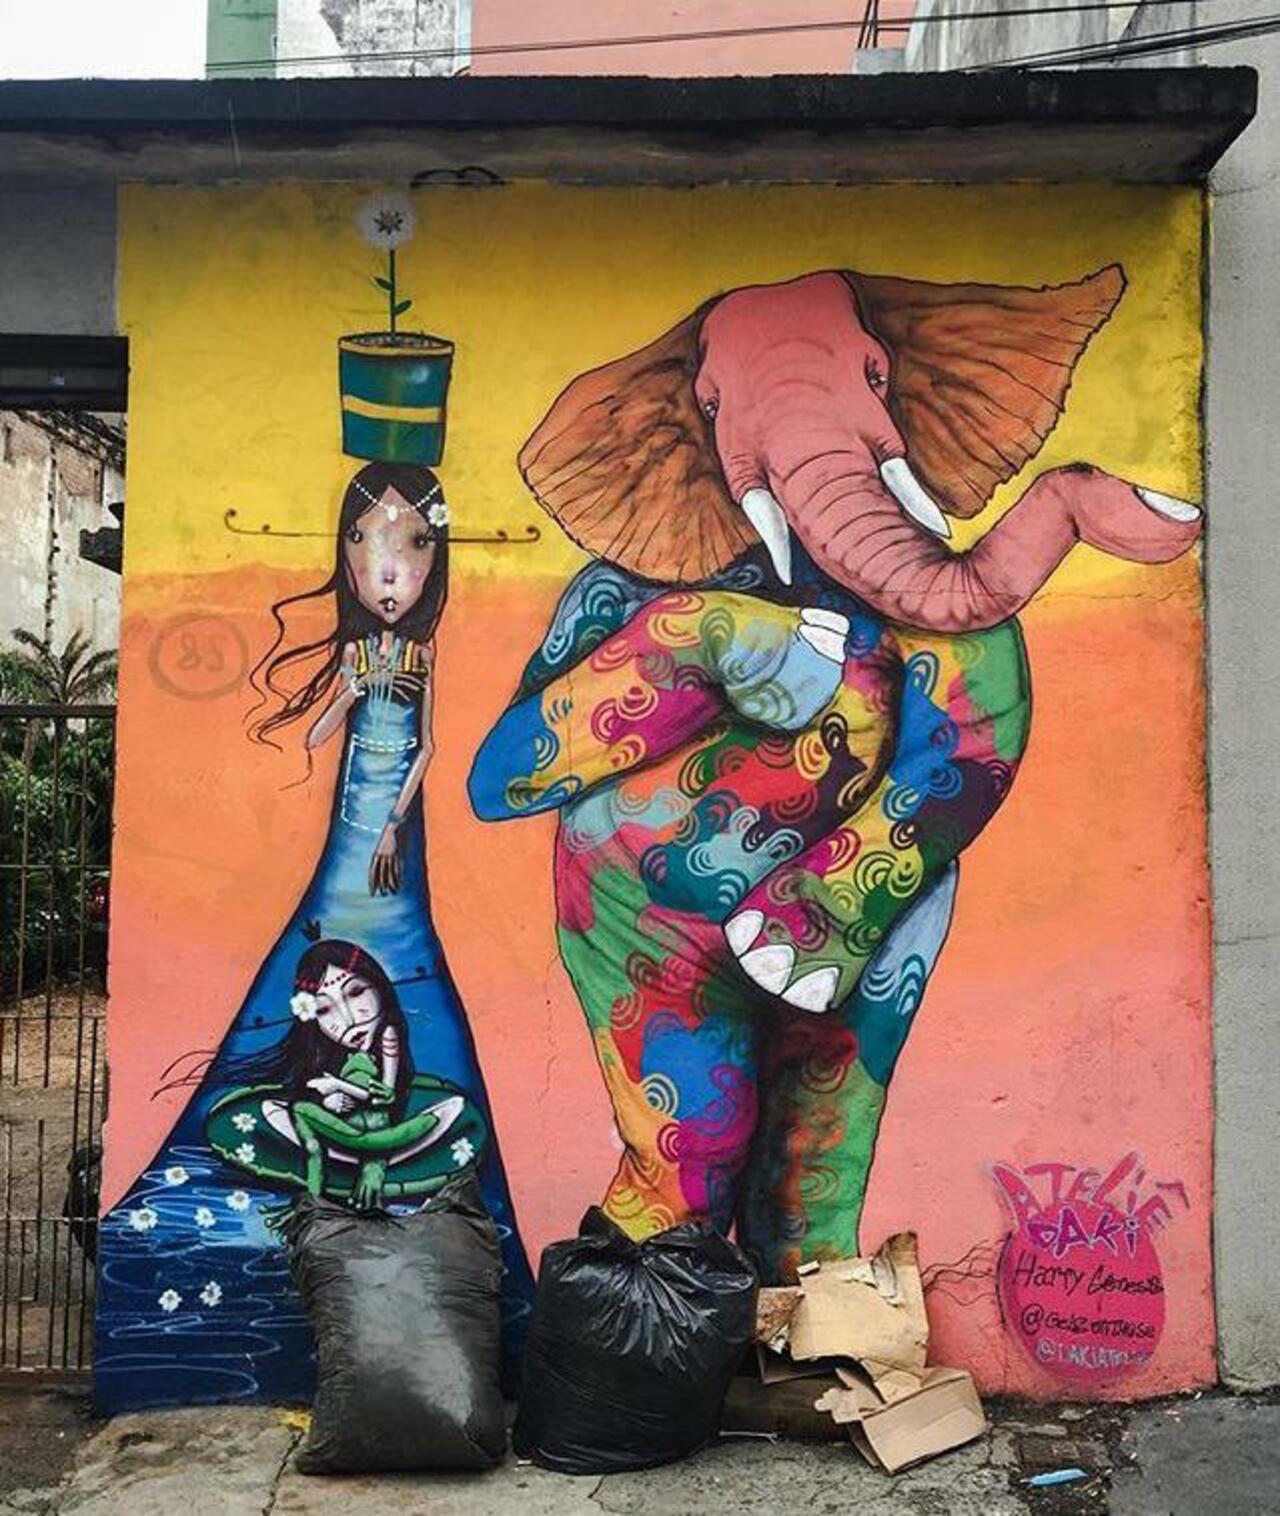 Street Art by Harry Geneis & Gelson in São Paulo #art #mural #graffiti #streetart http://t.co/SlLbhuMZfD … … …… … http://twitter.com/GoogleStreetArt/status/648016473831645184/photo/1/large?utm_source=fb&utm_medium=fb&utm_campaign=charlesjackso14&utm_content=648021495617331200